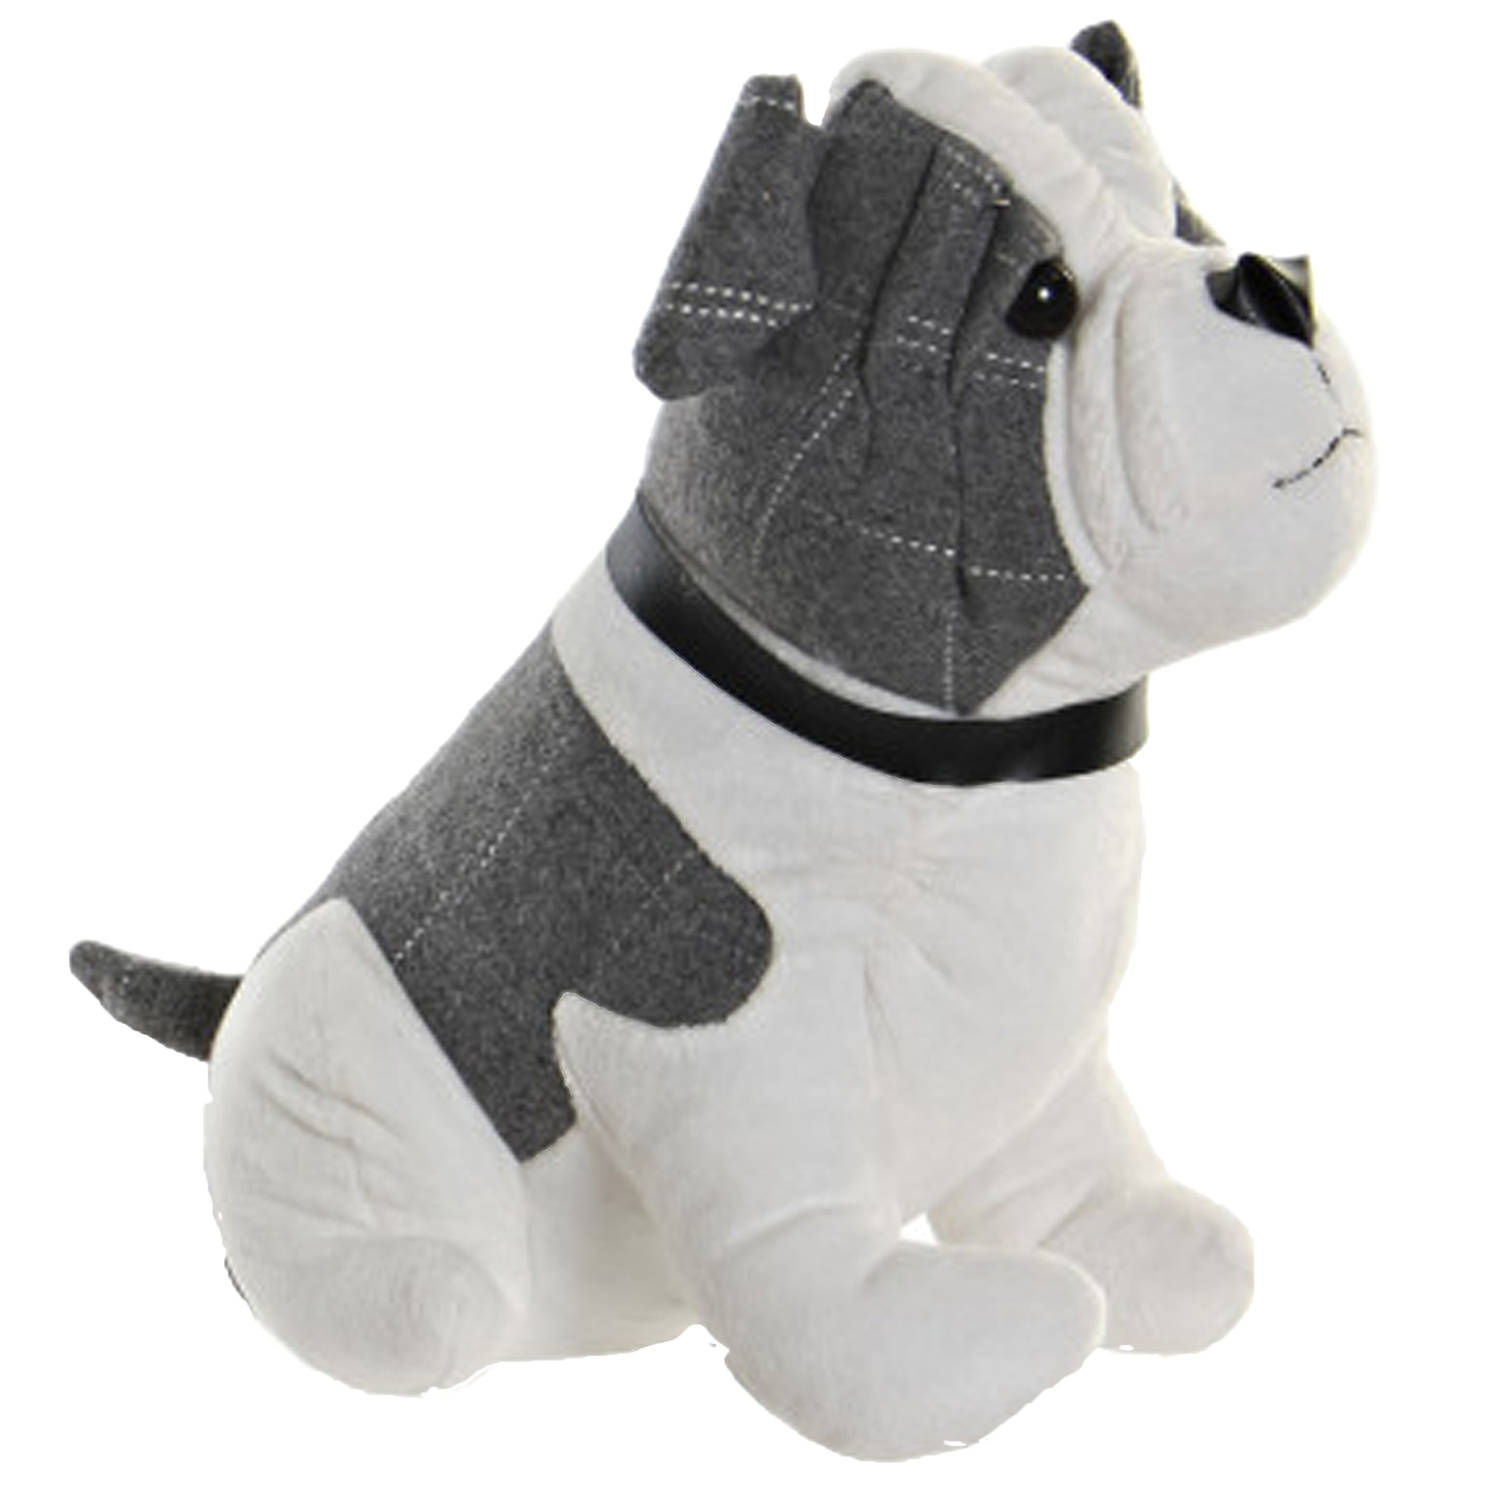 Items Deurstopper 1 kilo gewicht Hond Franse Bulldog grijs-wit 29 x 26 cm Deurstoppers